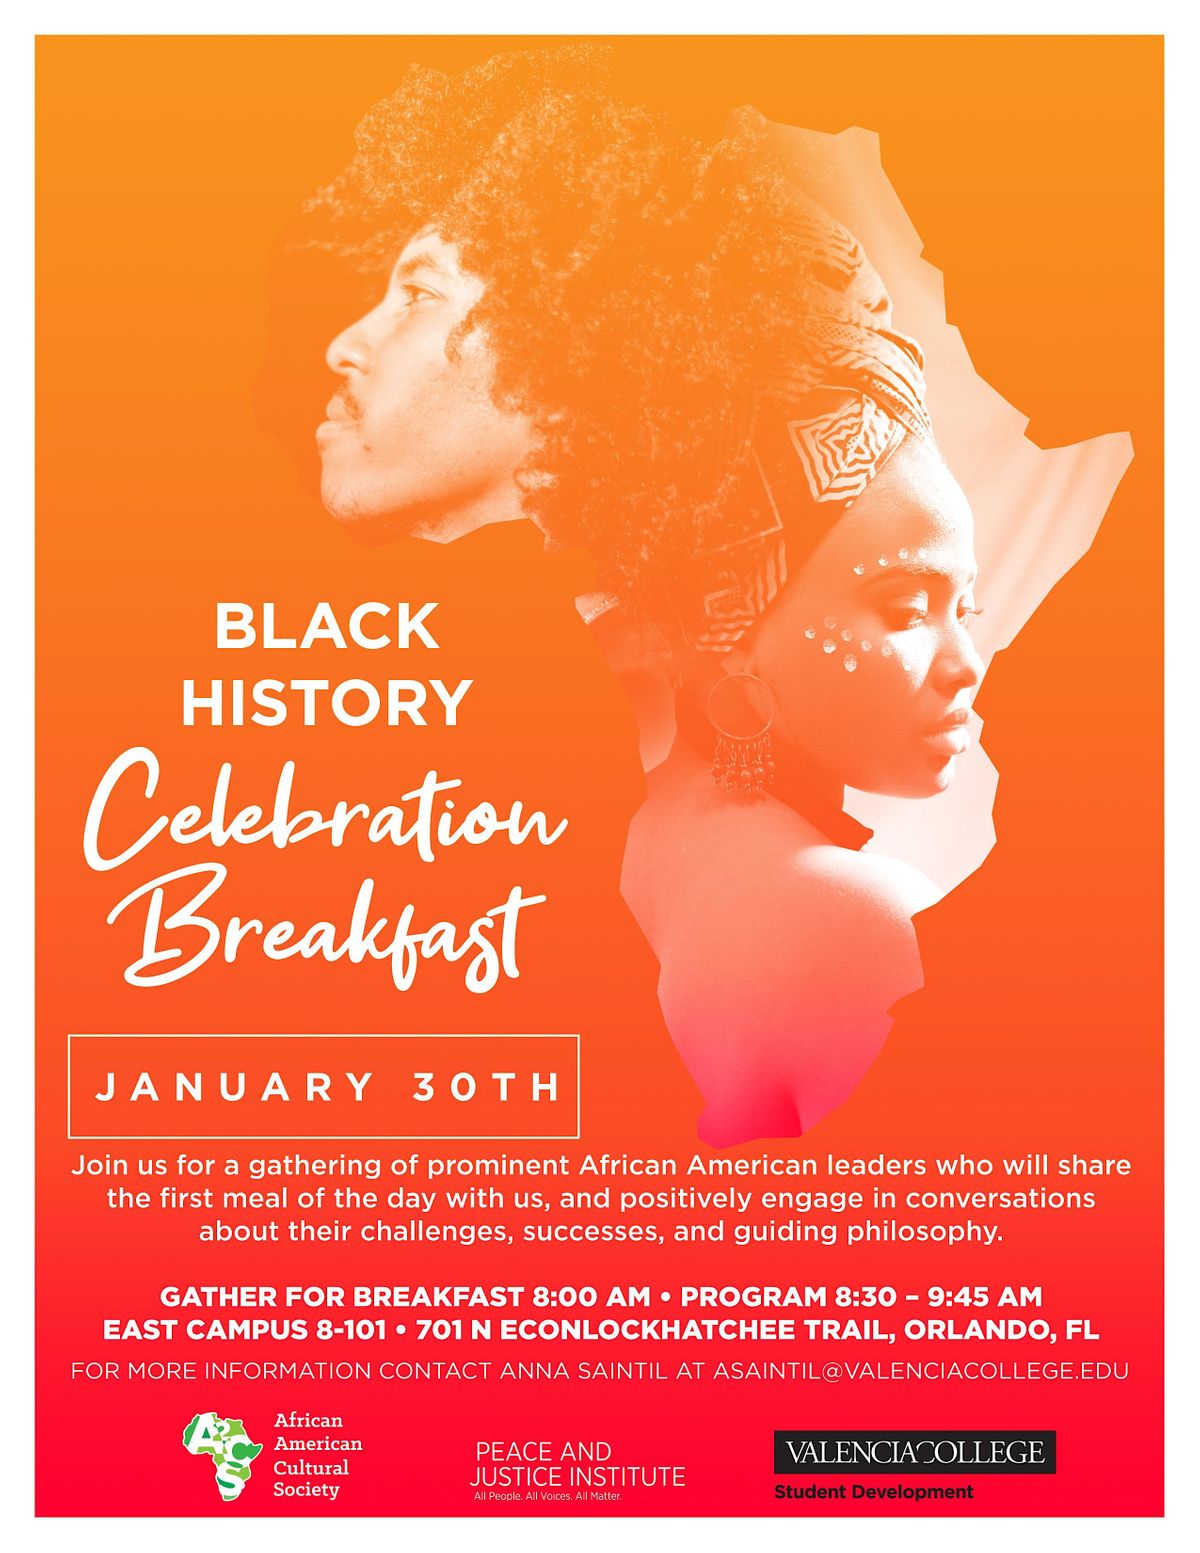 Black History Celebration Breakfast